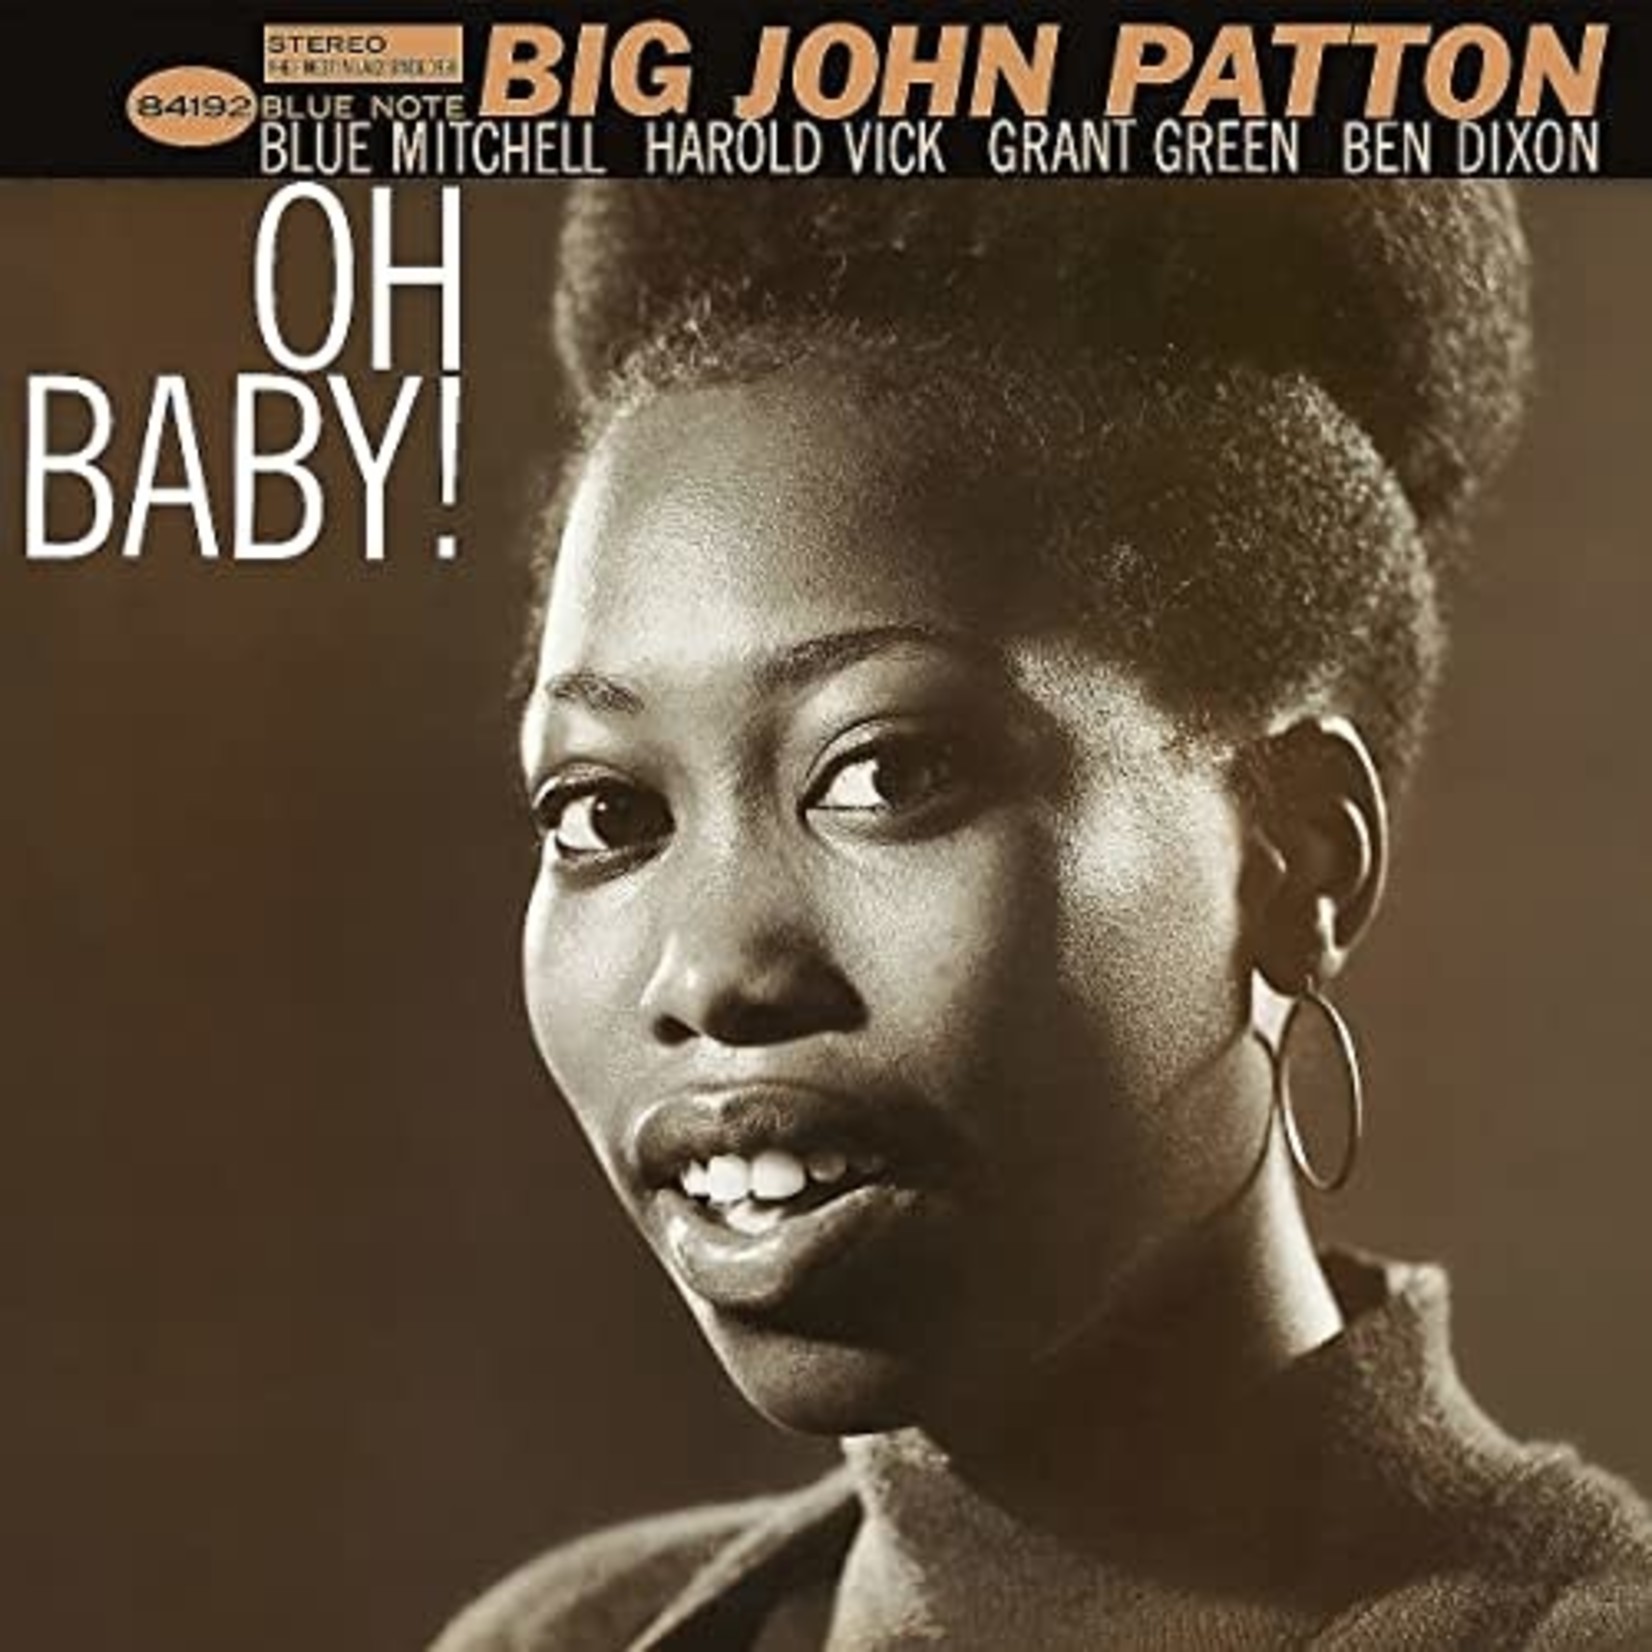 [New] Big John Patton - Oh Baby! (Blue Note Classic Vinyl Series)